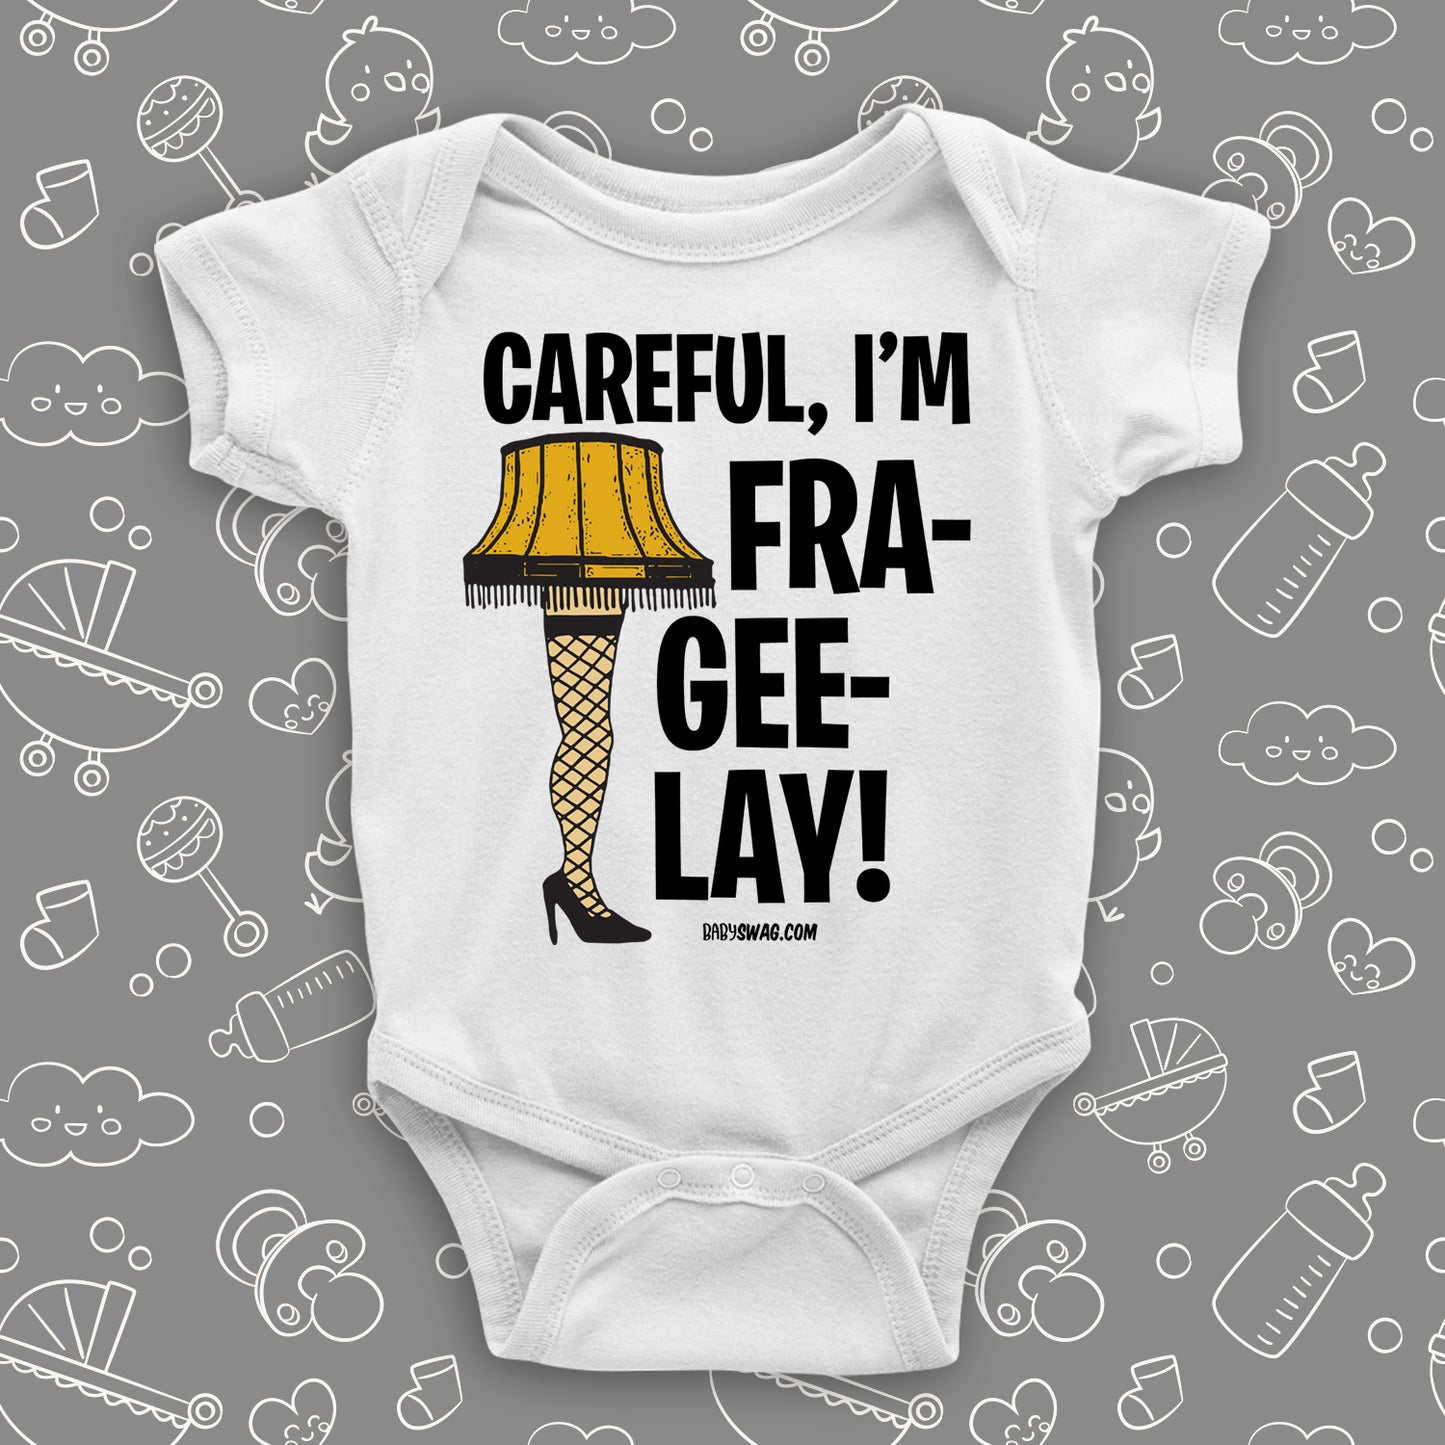 Careful, I'm Fra-gee-lay!